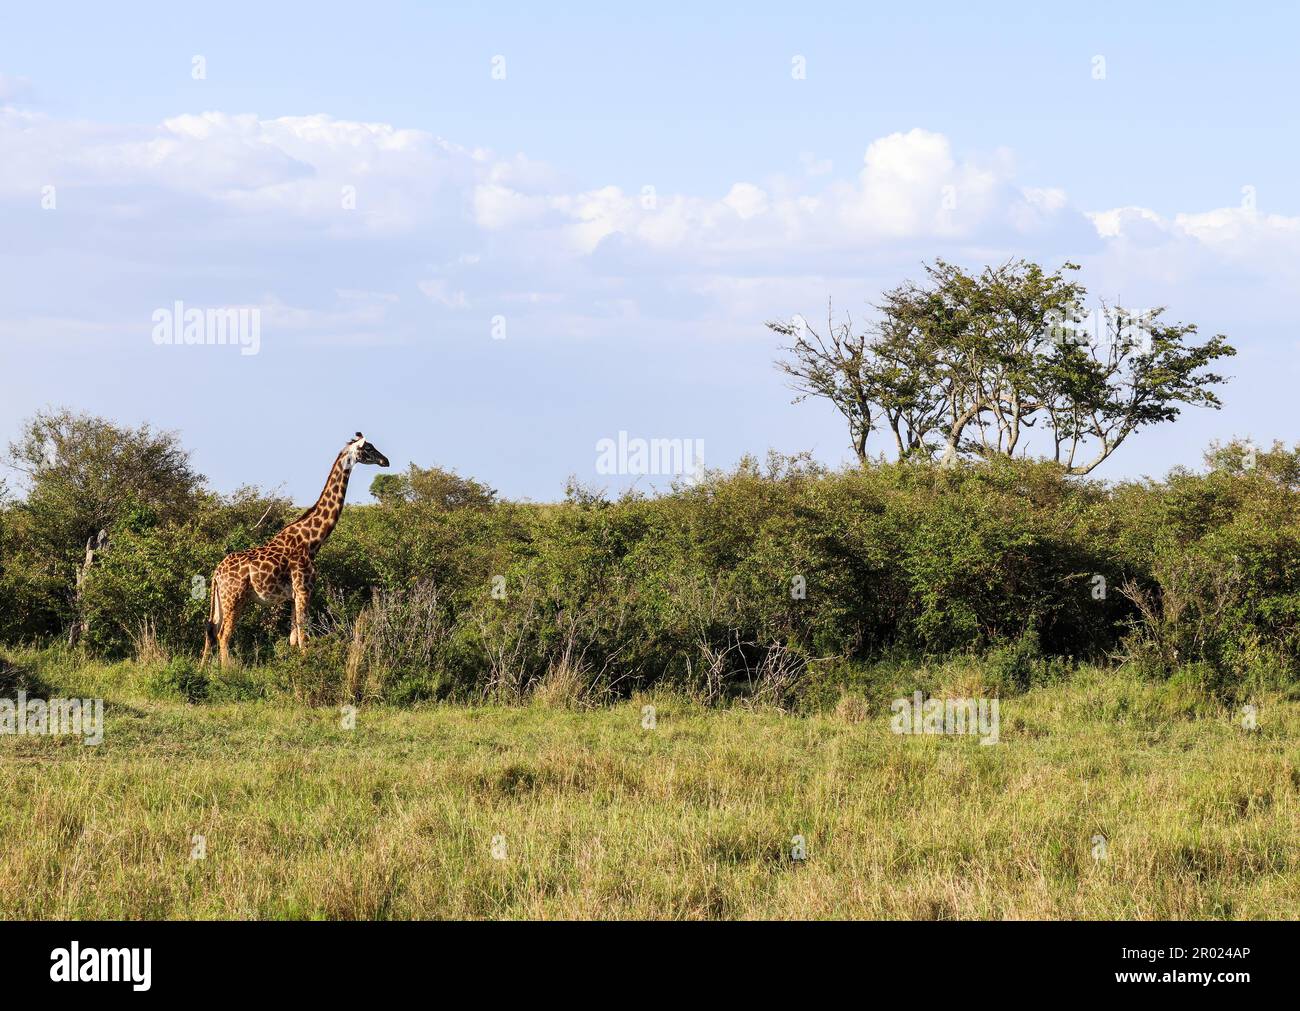 Beautiful giraffe in the wild nature of Africa Stock Photo